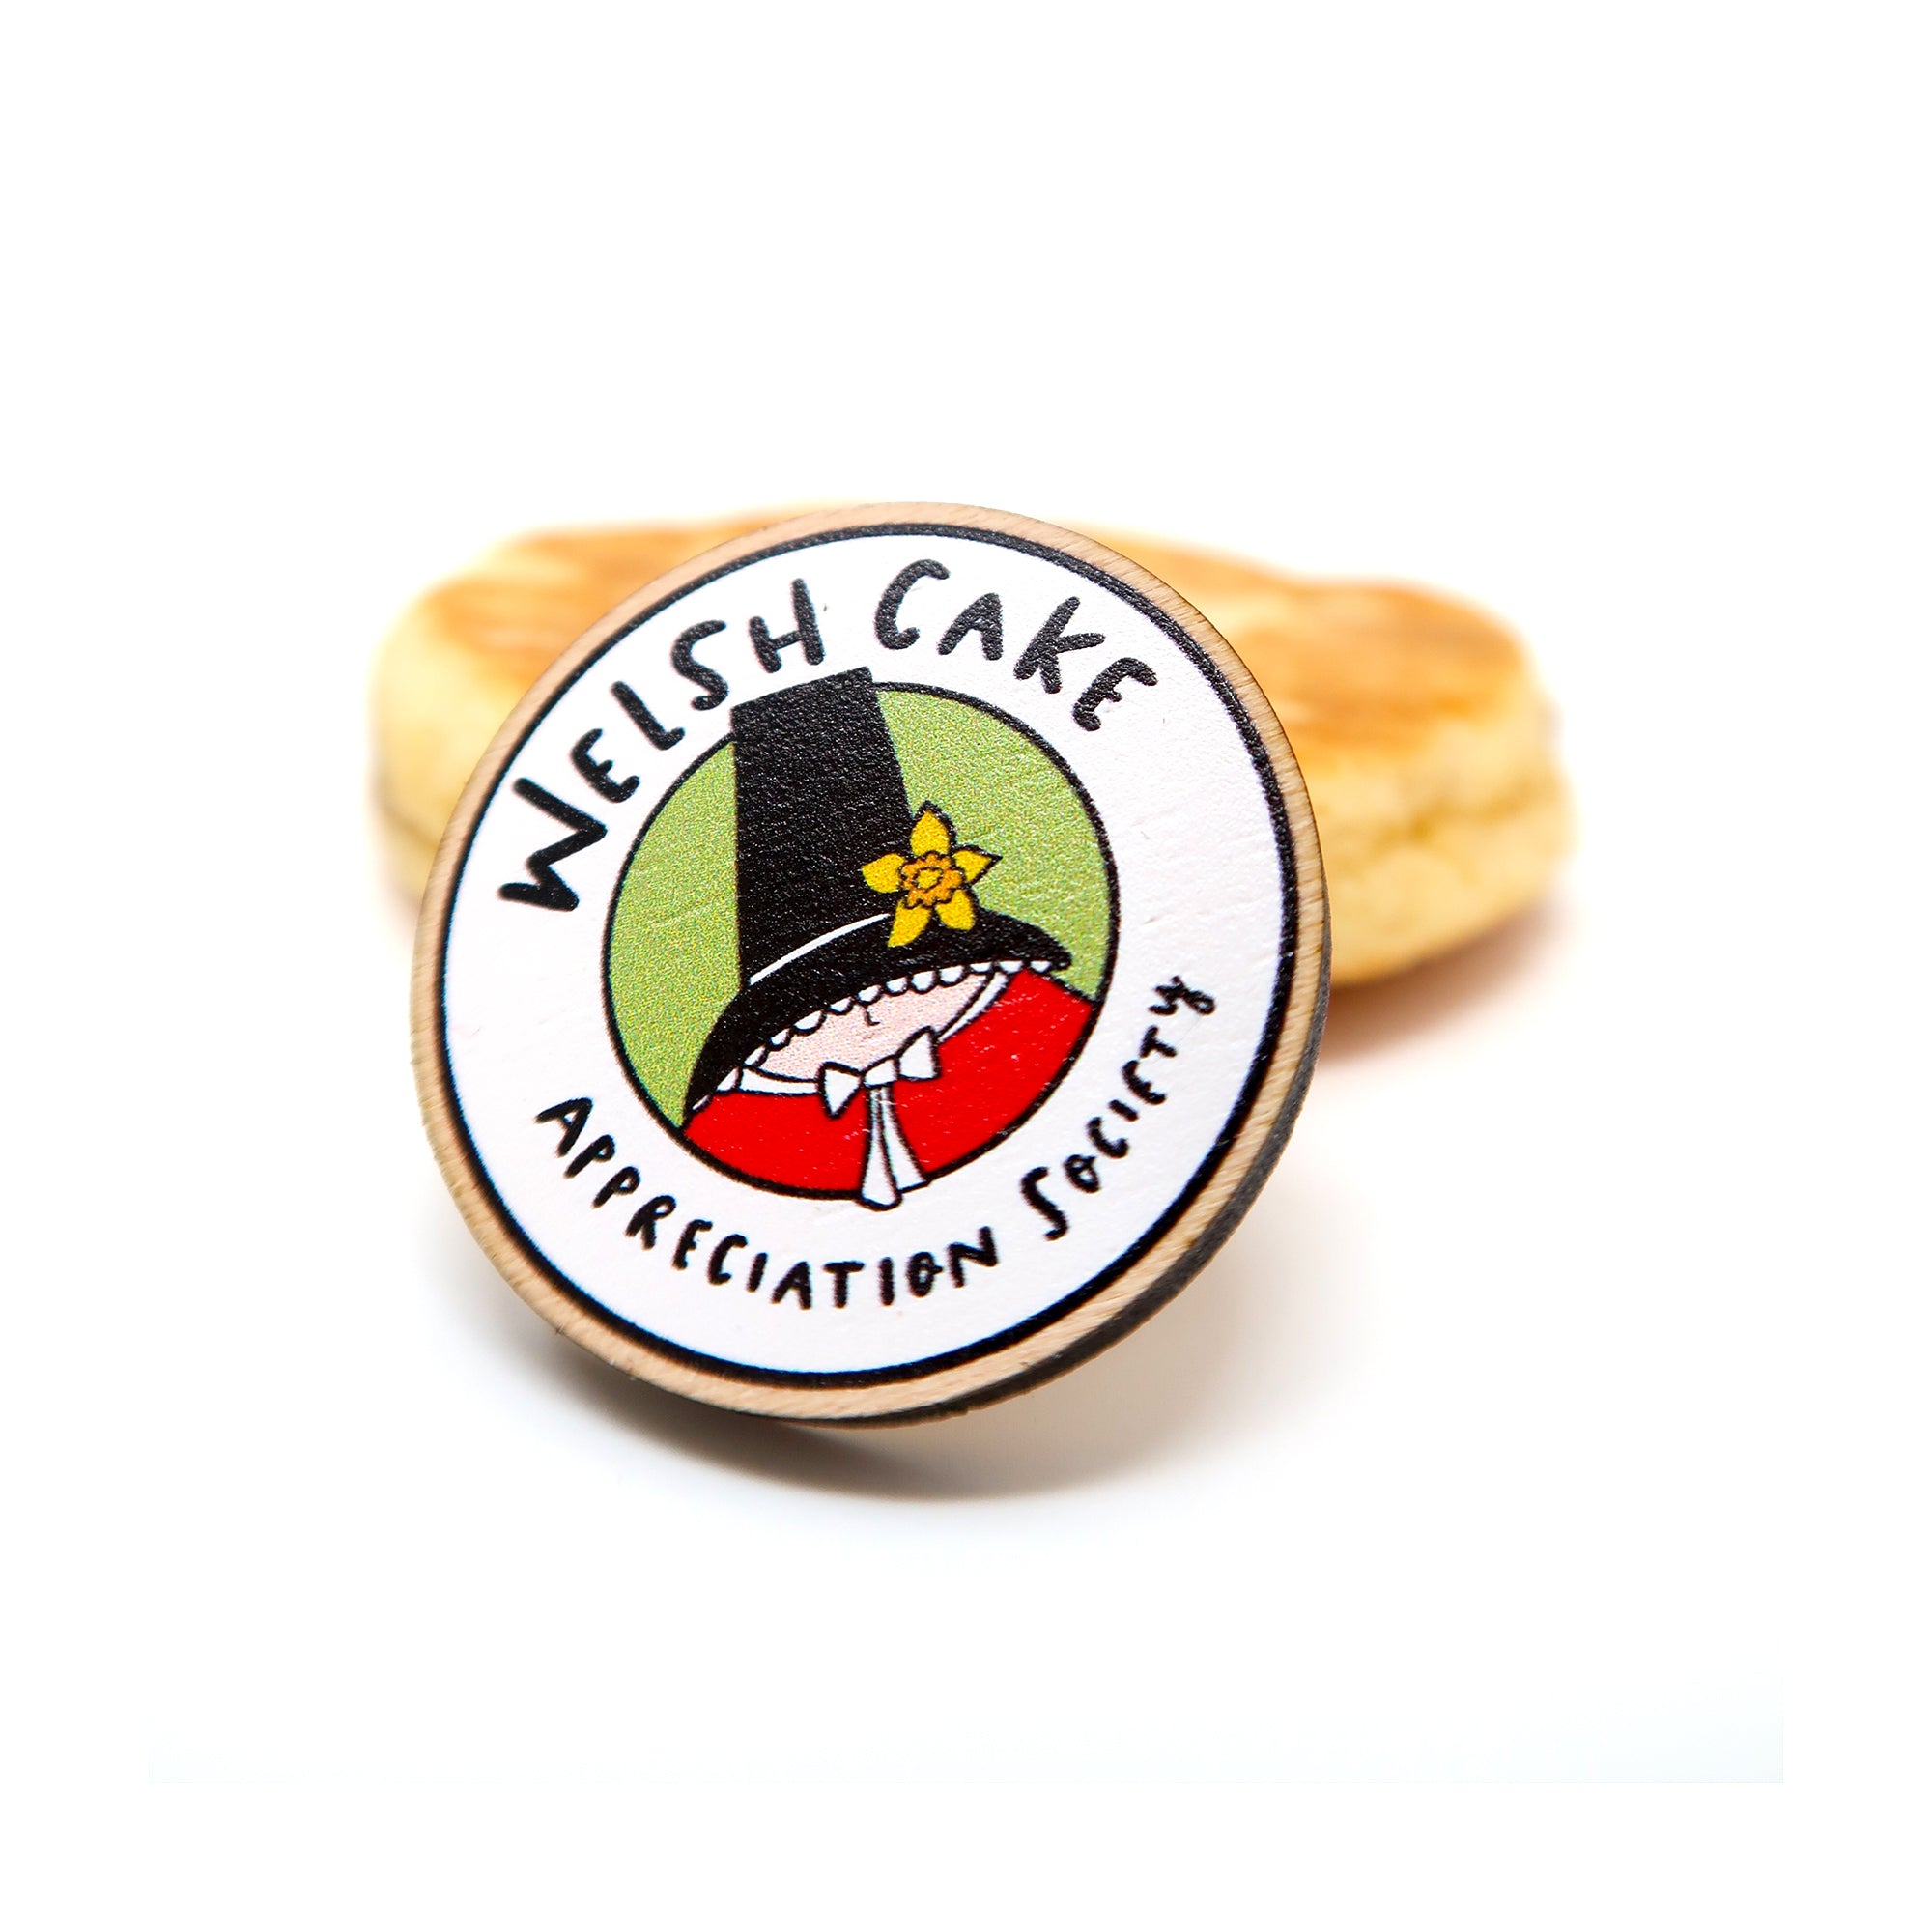 Welsh cake appreciation society pin badge